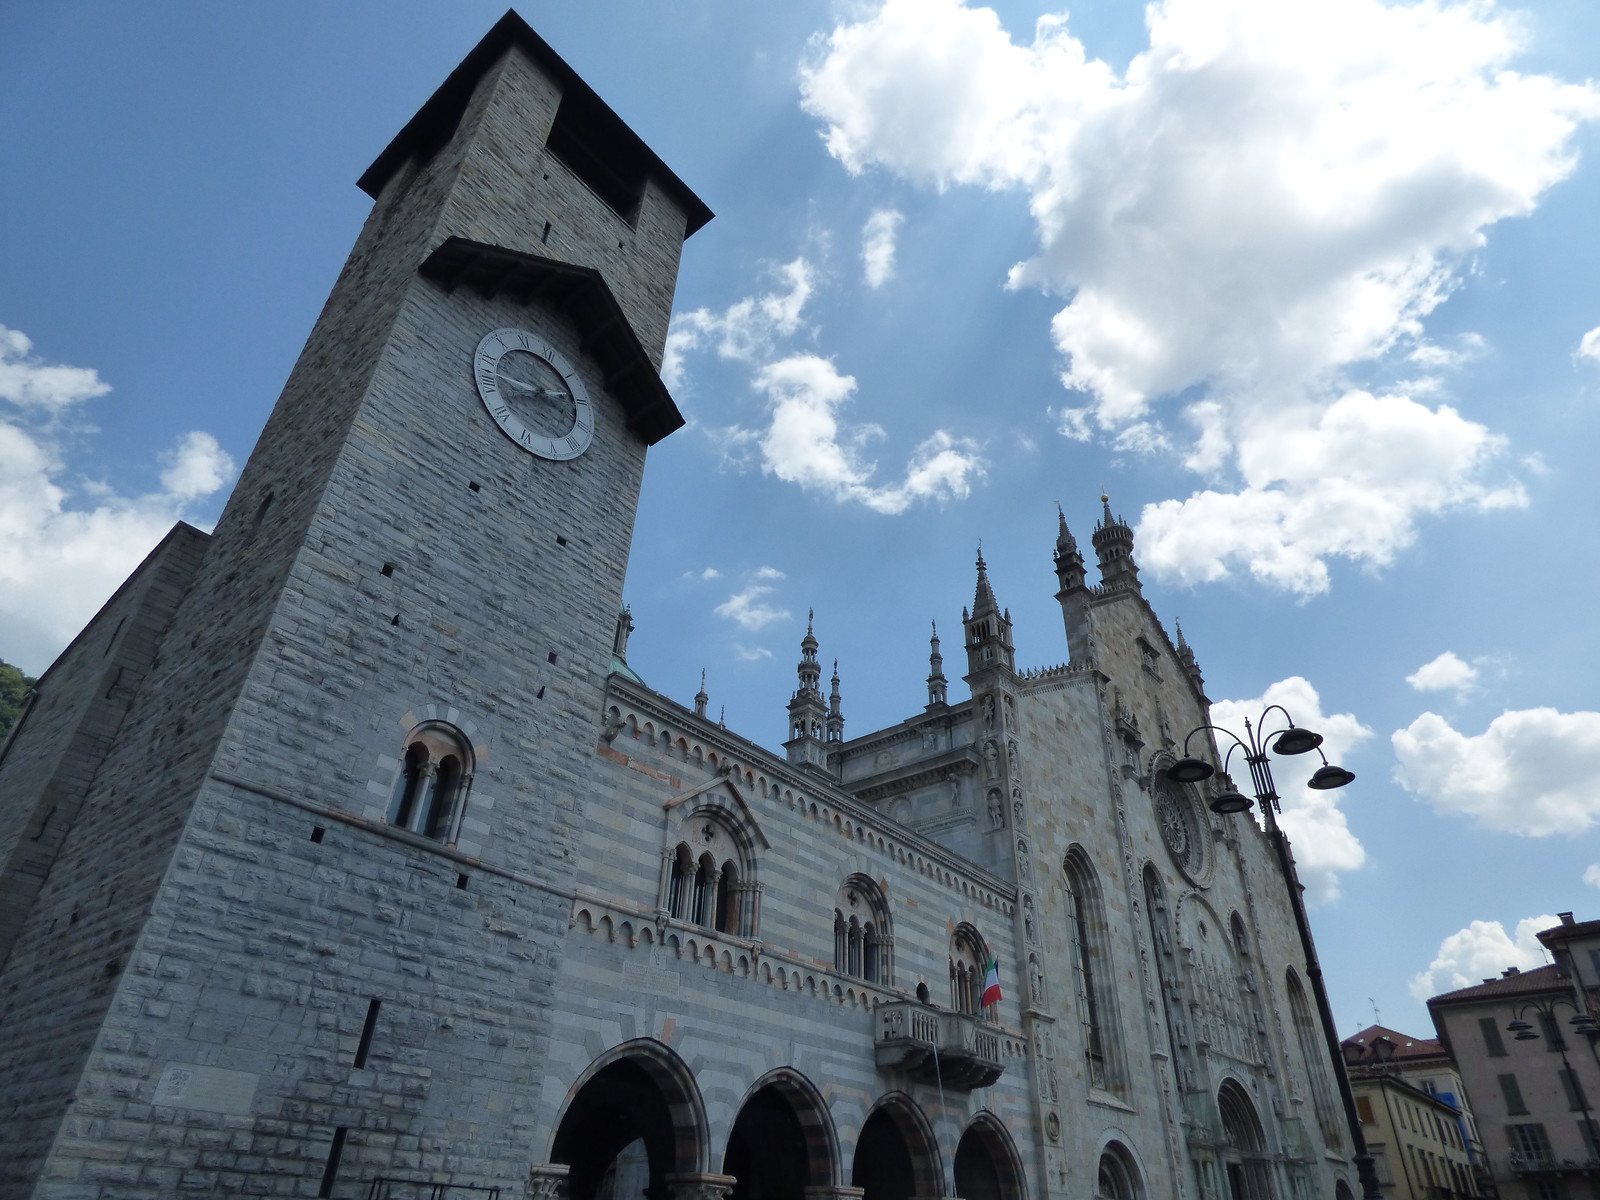 Bell tower, Broletto & Como Cathedral - Piazza Duomo, Como